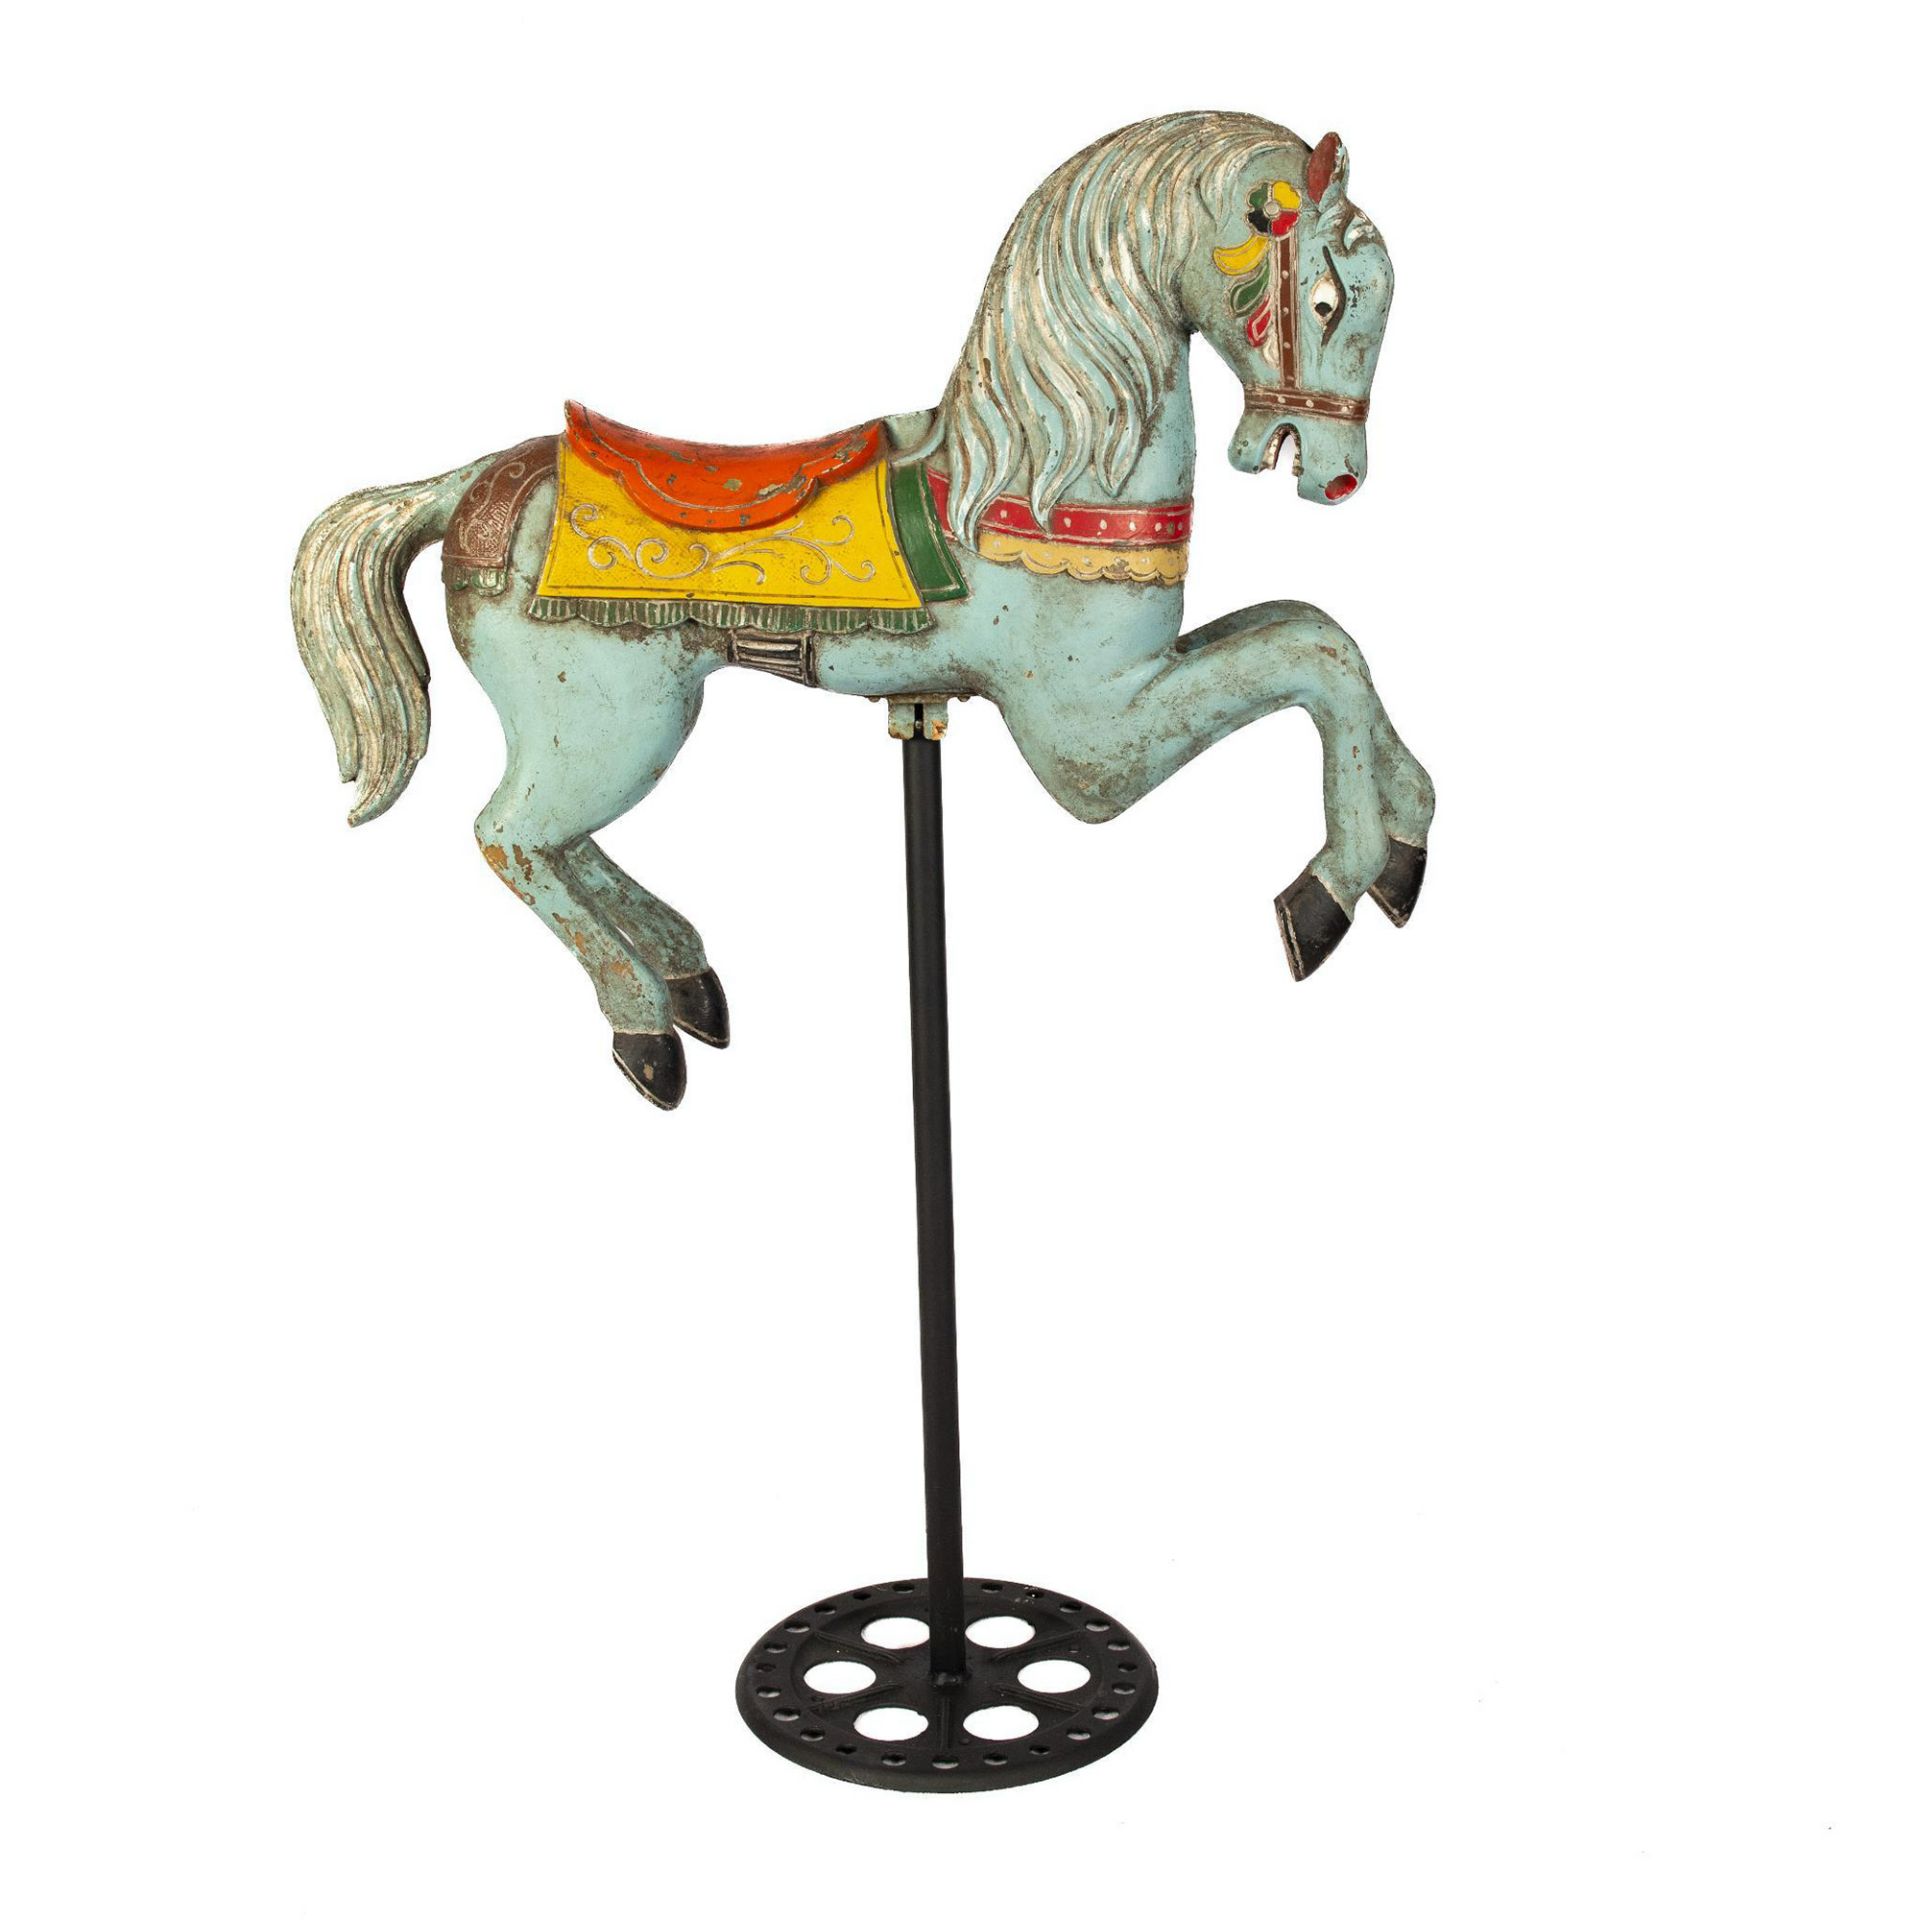 Antique Carnival Fiberglass Carousel Horse